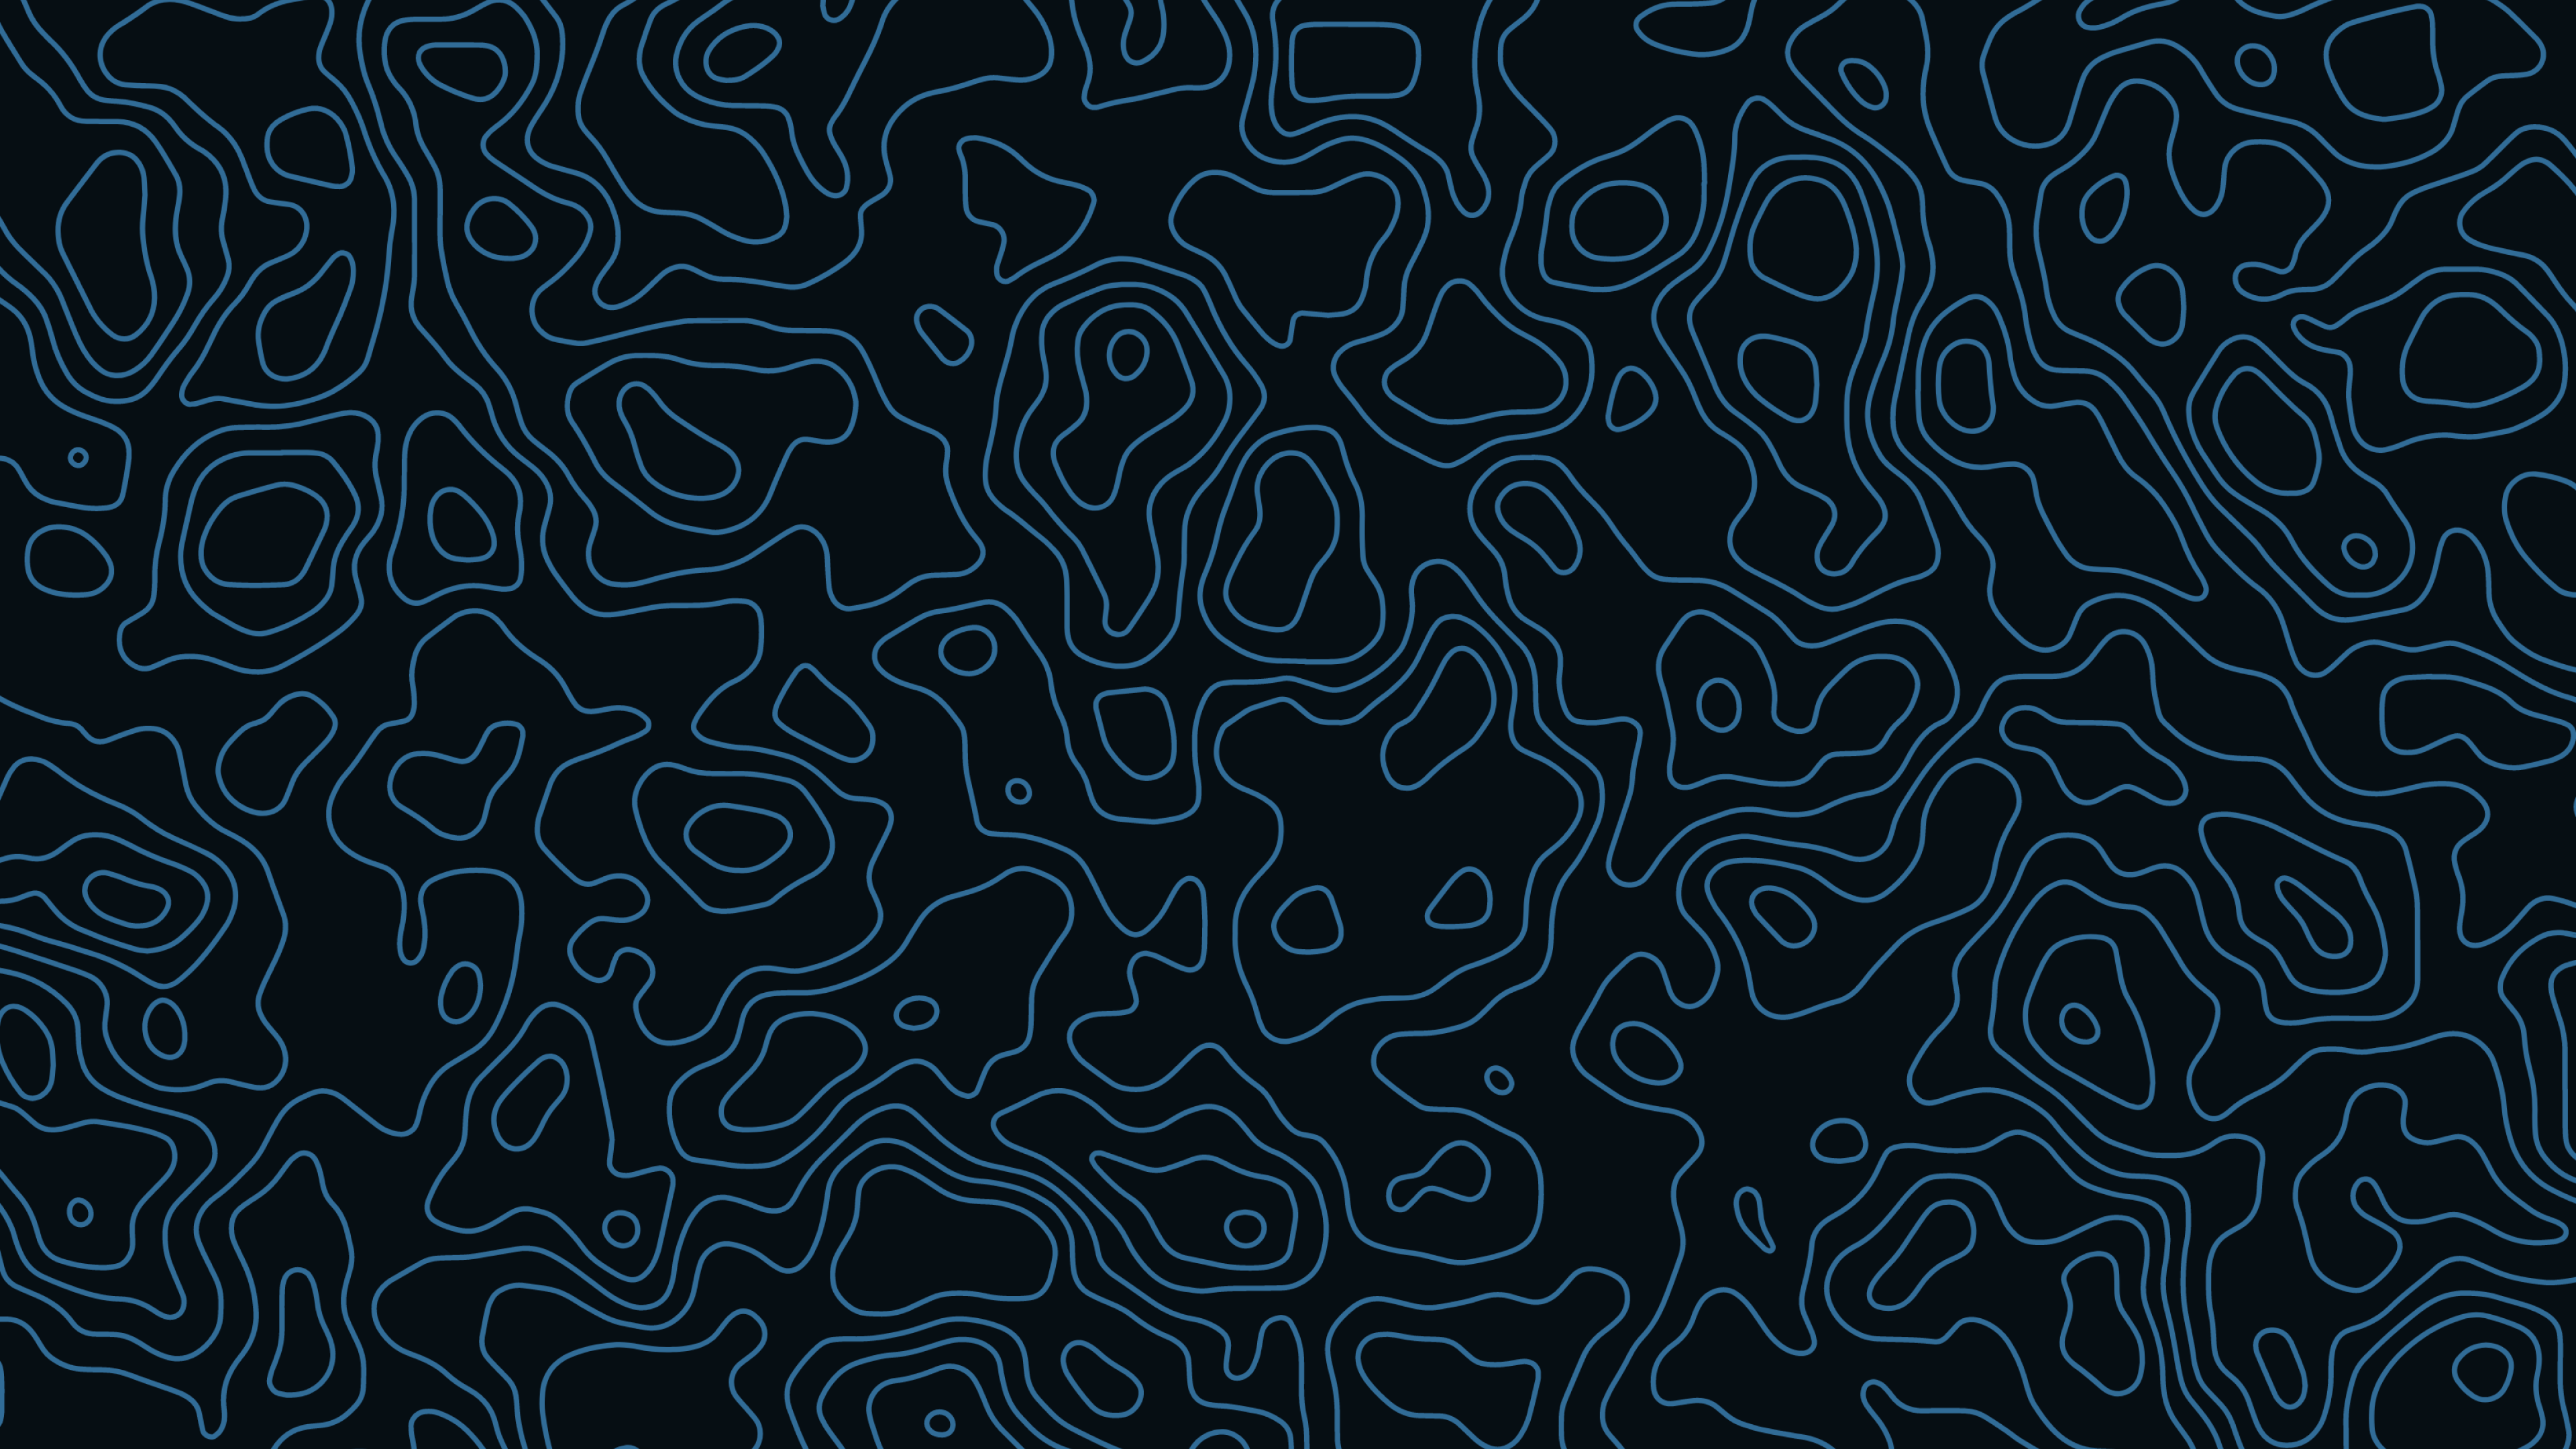 General 3840x2160 topography line art simple background blue dark background abstract minimalism digital art